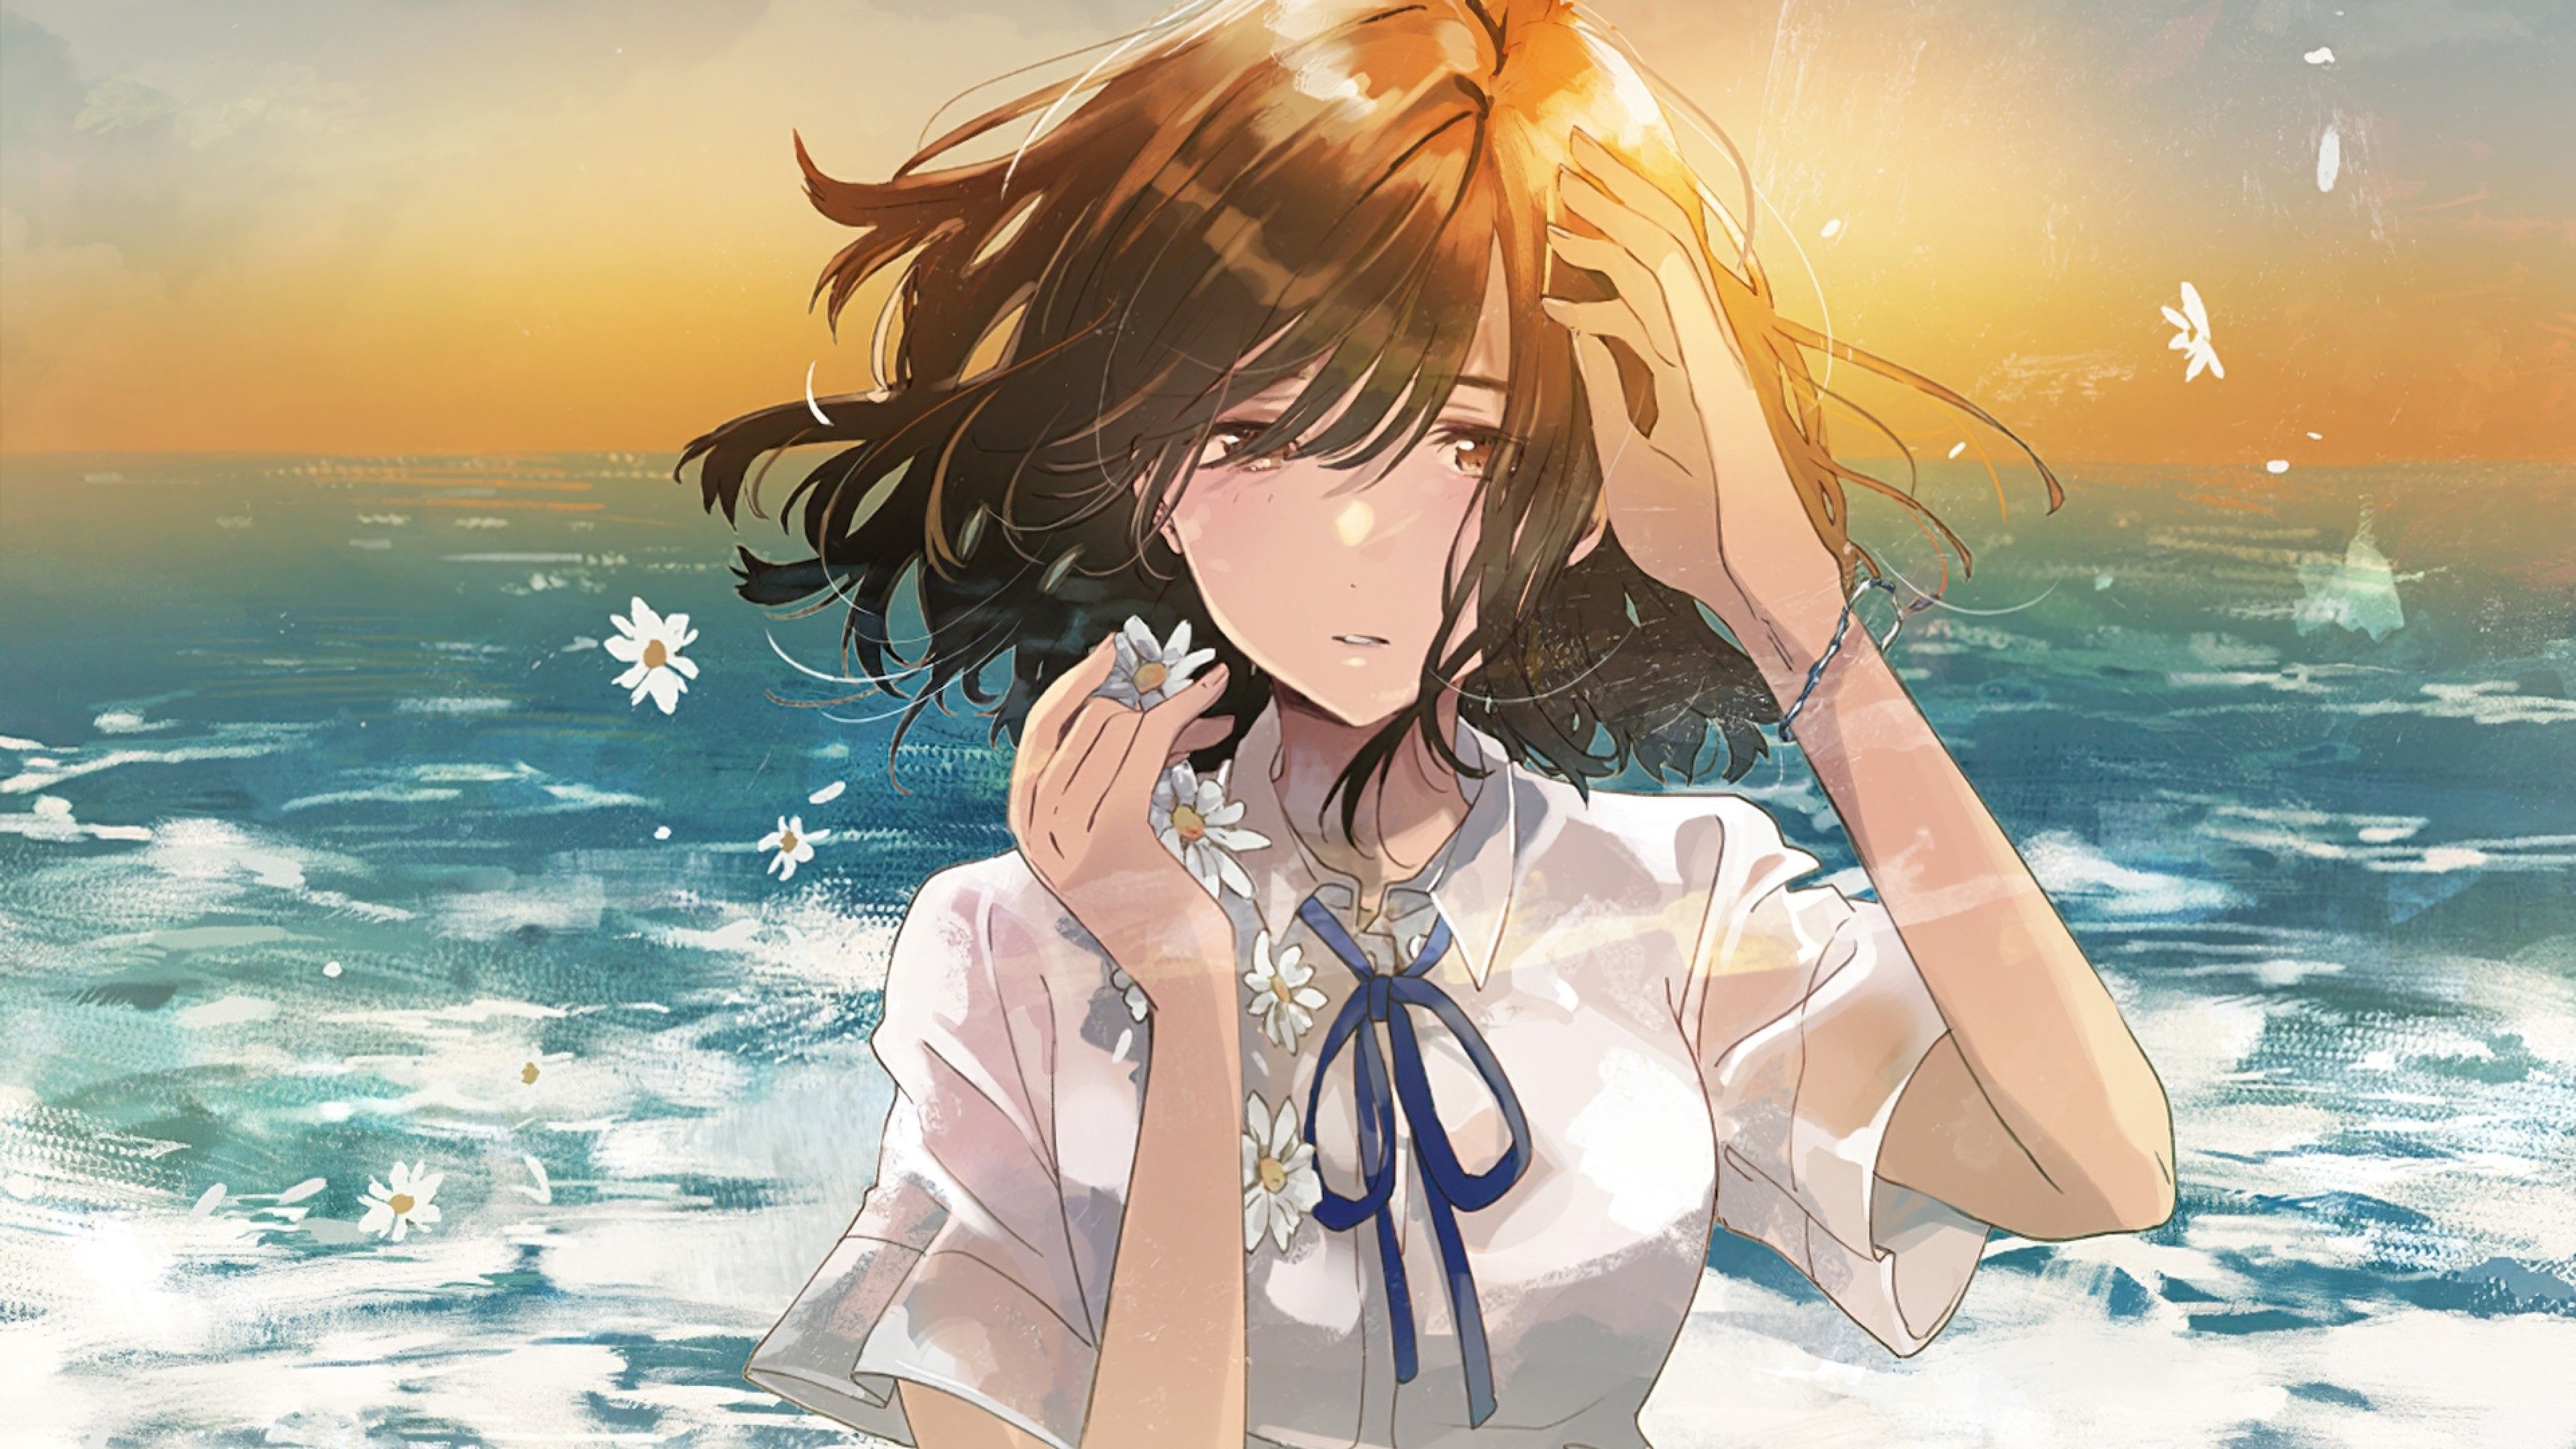 Download 3840x2160 Anime Girl, Sad Expression, Ocean, Horizon, Sunset, Short Brown Hair Wallpaper for UHD TV